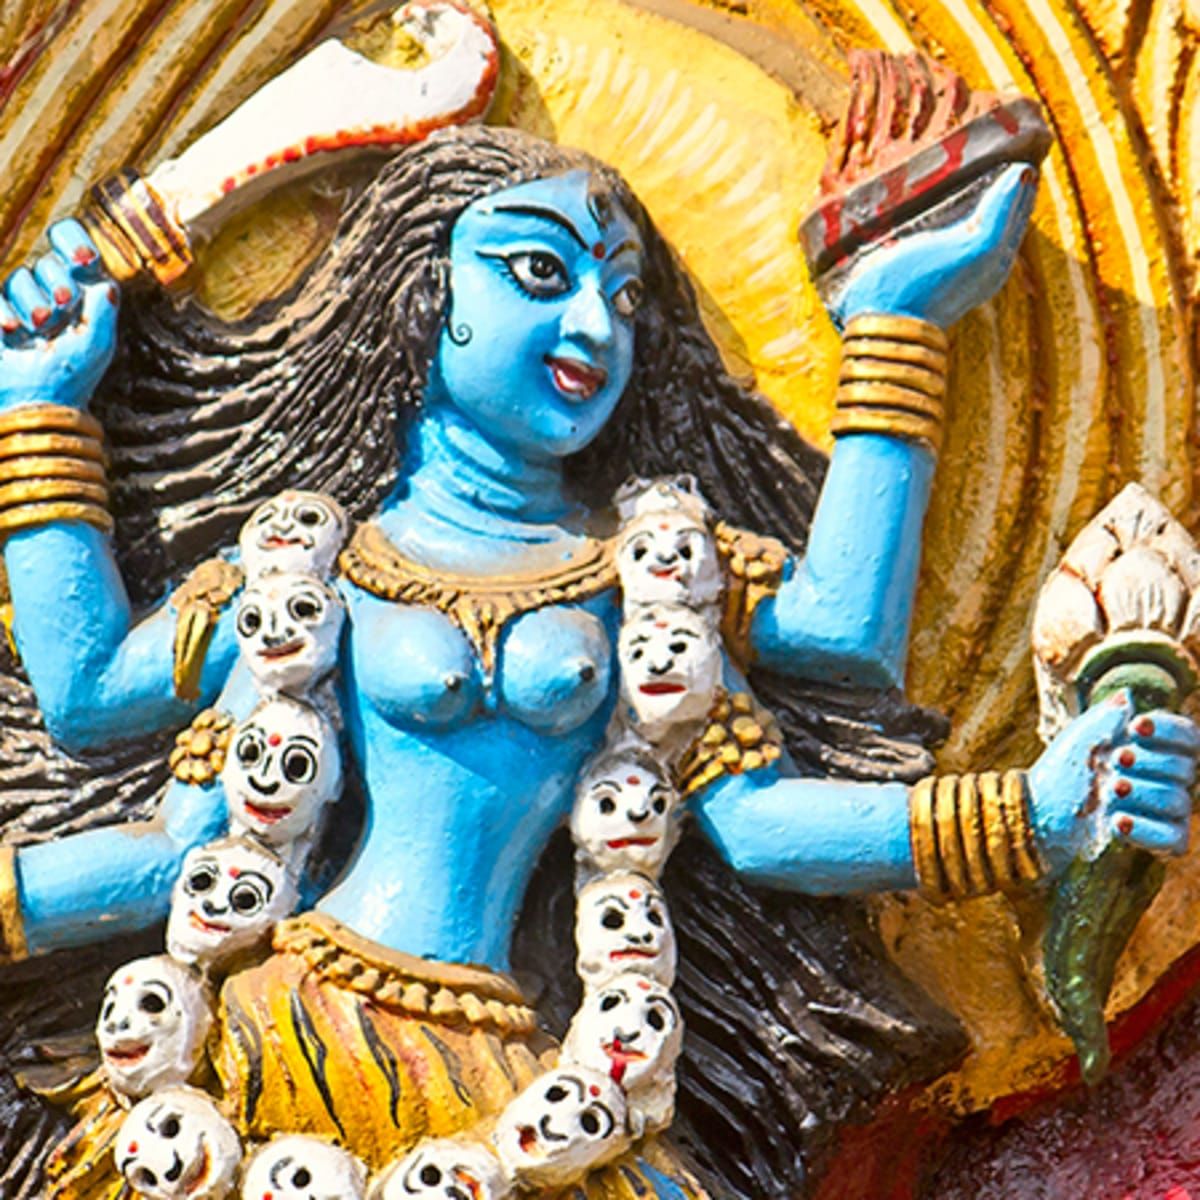 Tips from Goddess Kali on How to Find Inner Strength